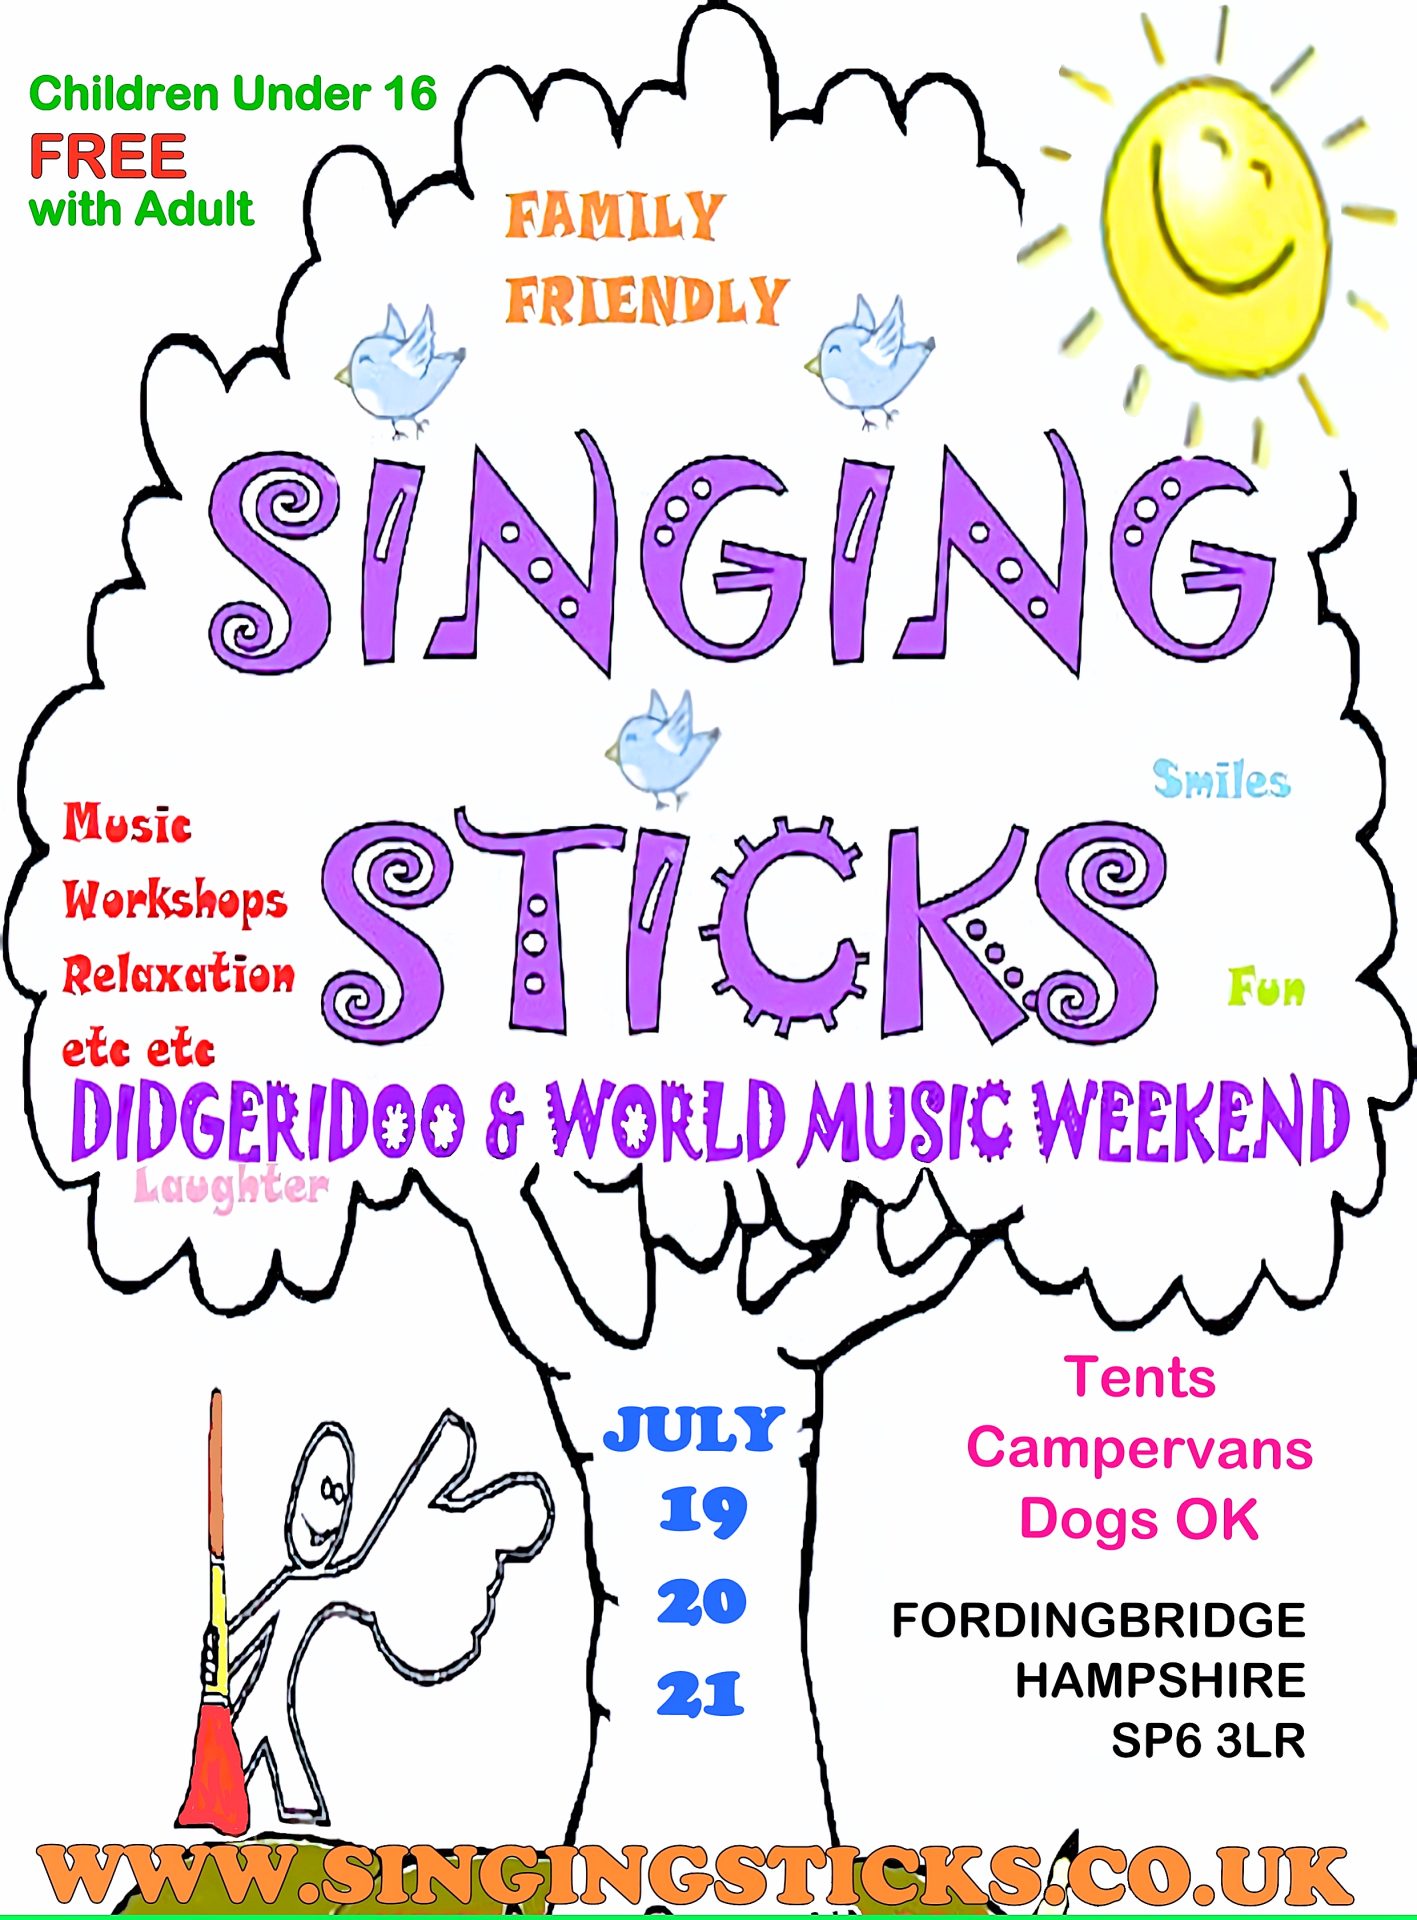 Singing Sticks weekend July 19 to 21 www.singingsticks.co.uk